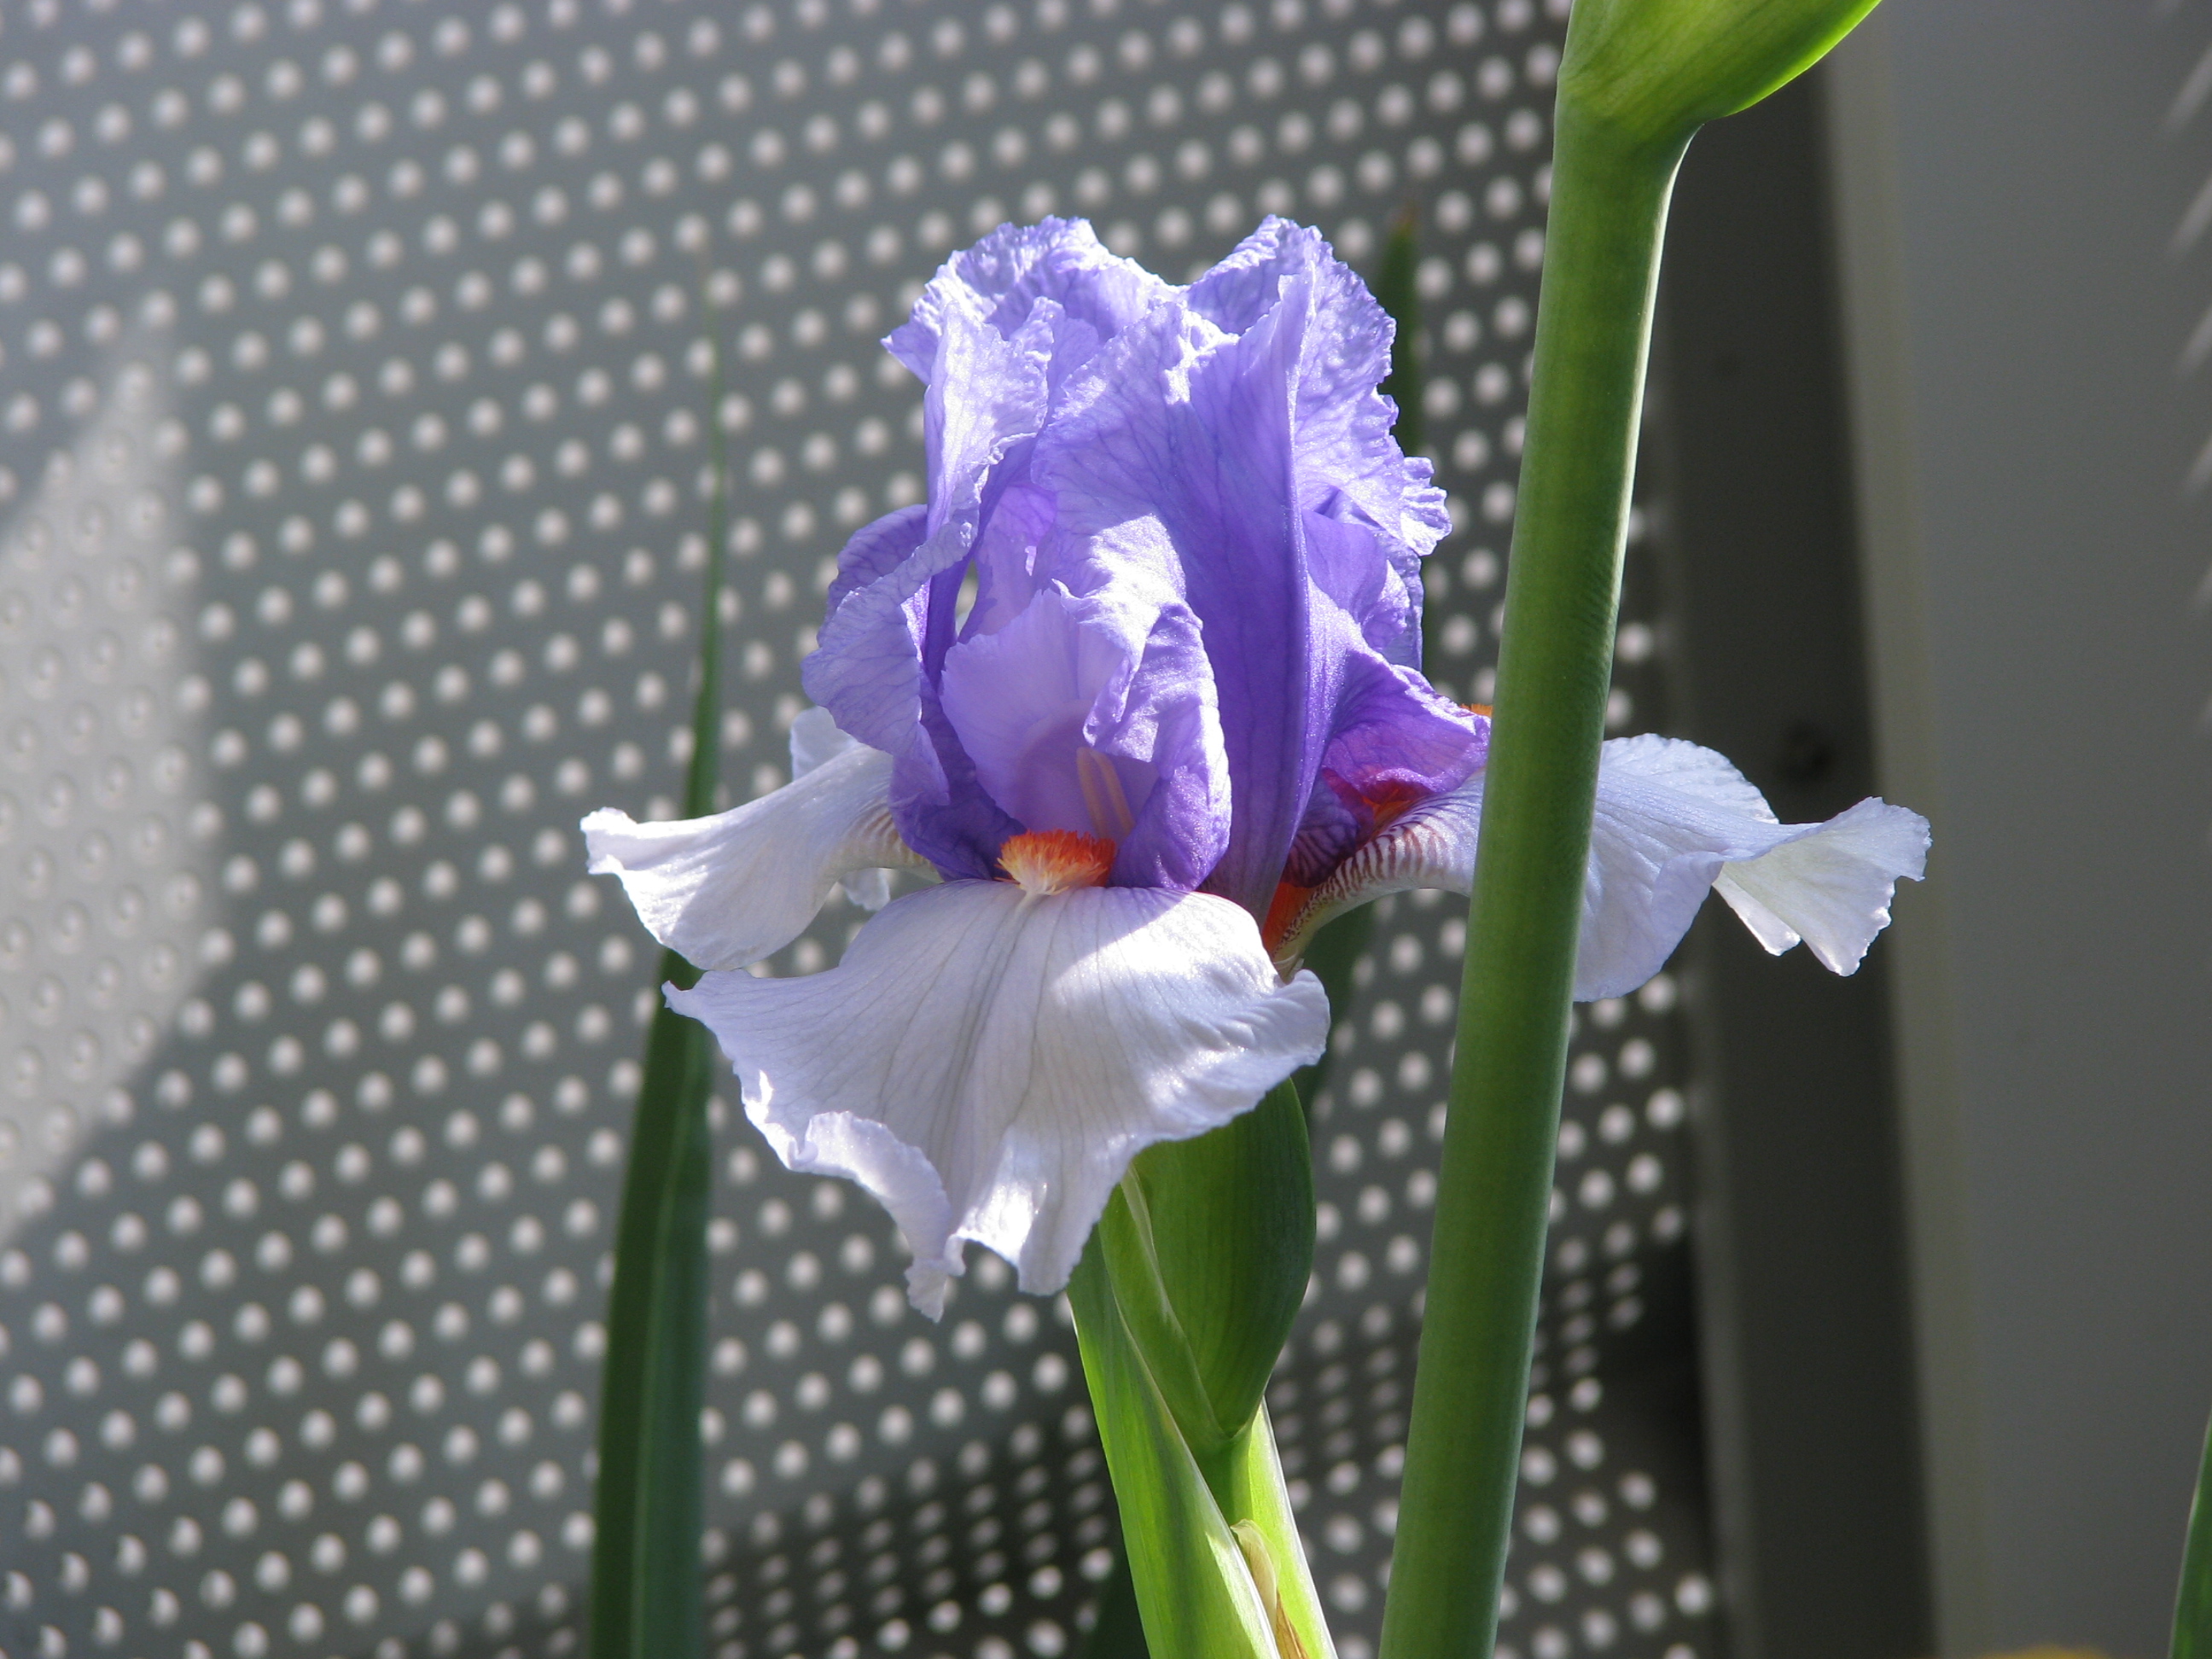 File:Iris mauve.JPG - Wikimedia Commons